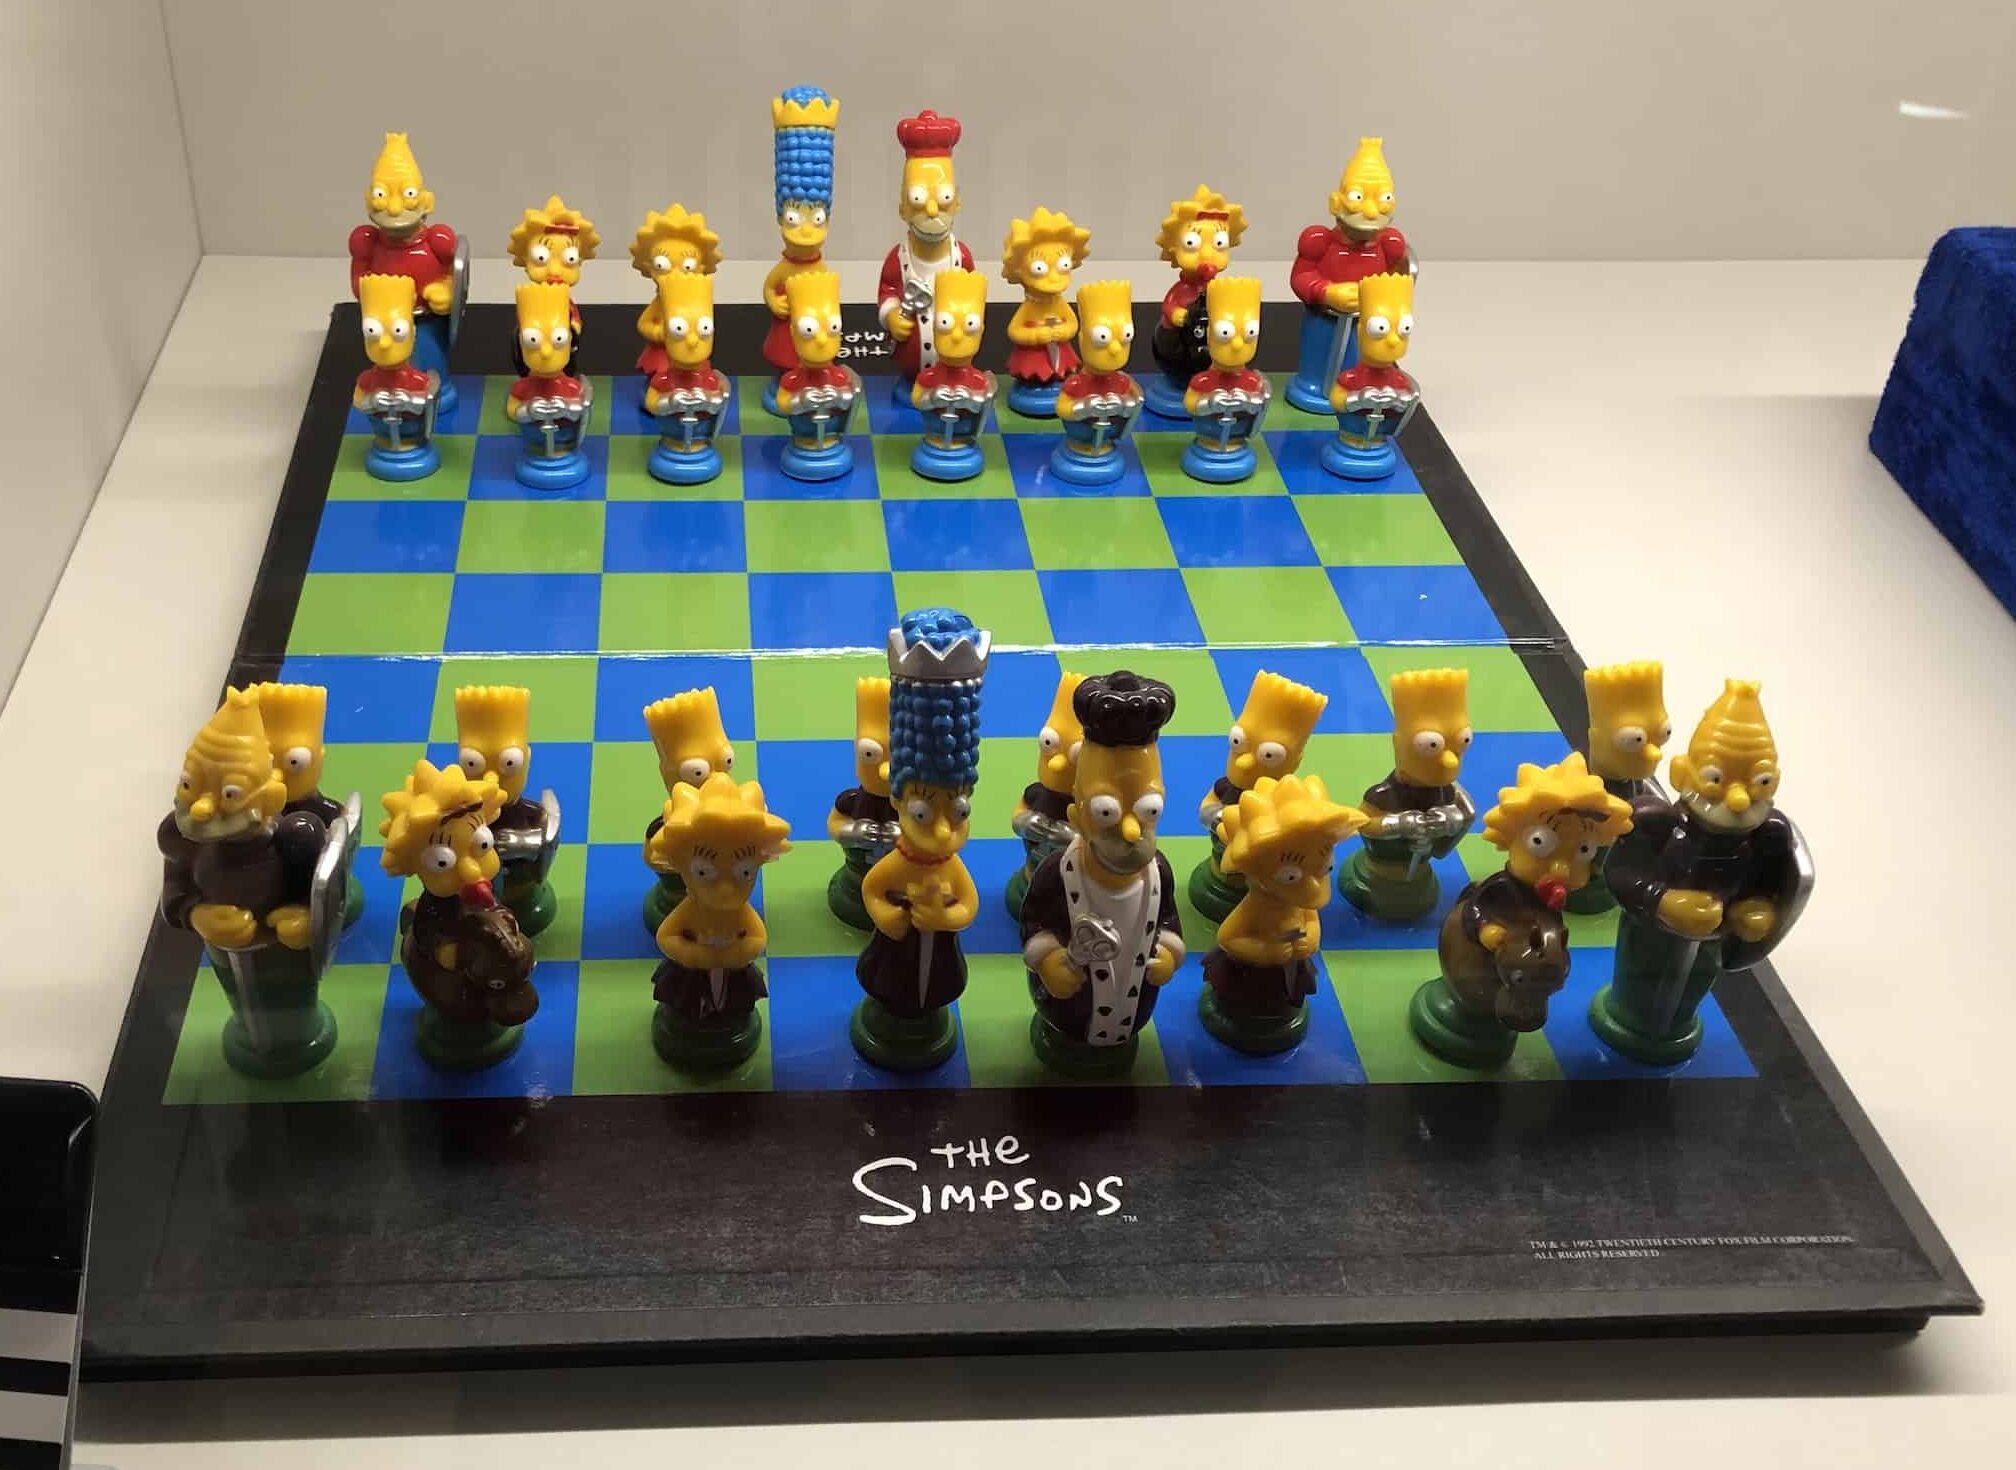 The Simpsons chess set (USA) at the Gökyay Foundation Chess Museum in Ankara, Turkey